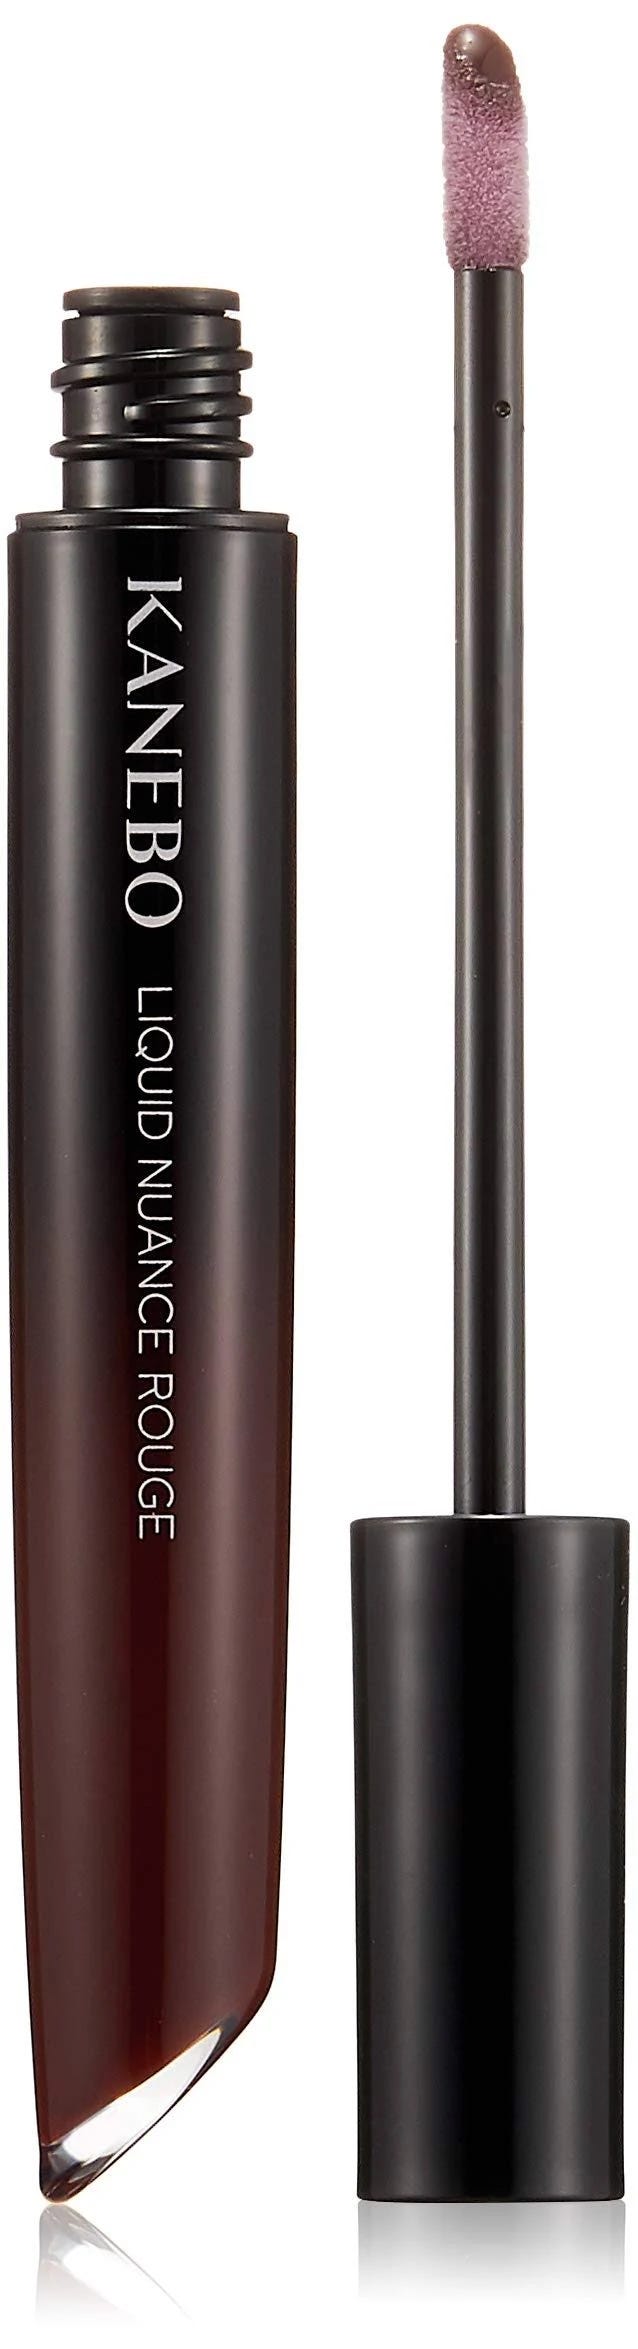 Kanebo Breaking Dawn Black Lipstick: A Luxurious Eyewear Experience | Image